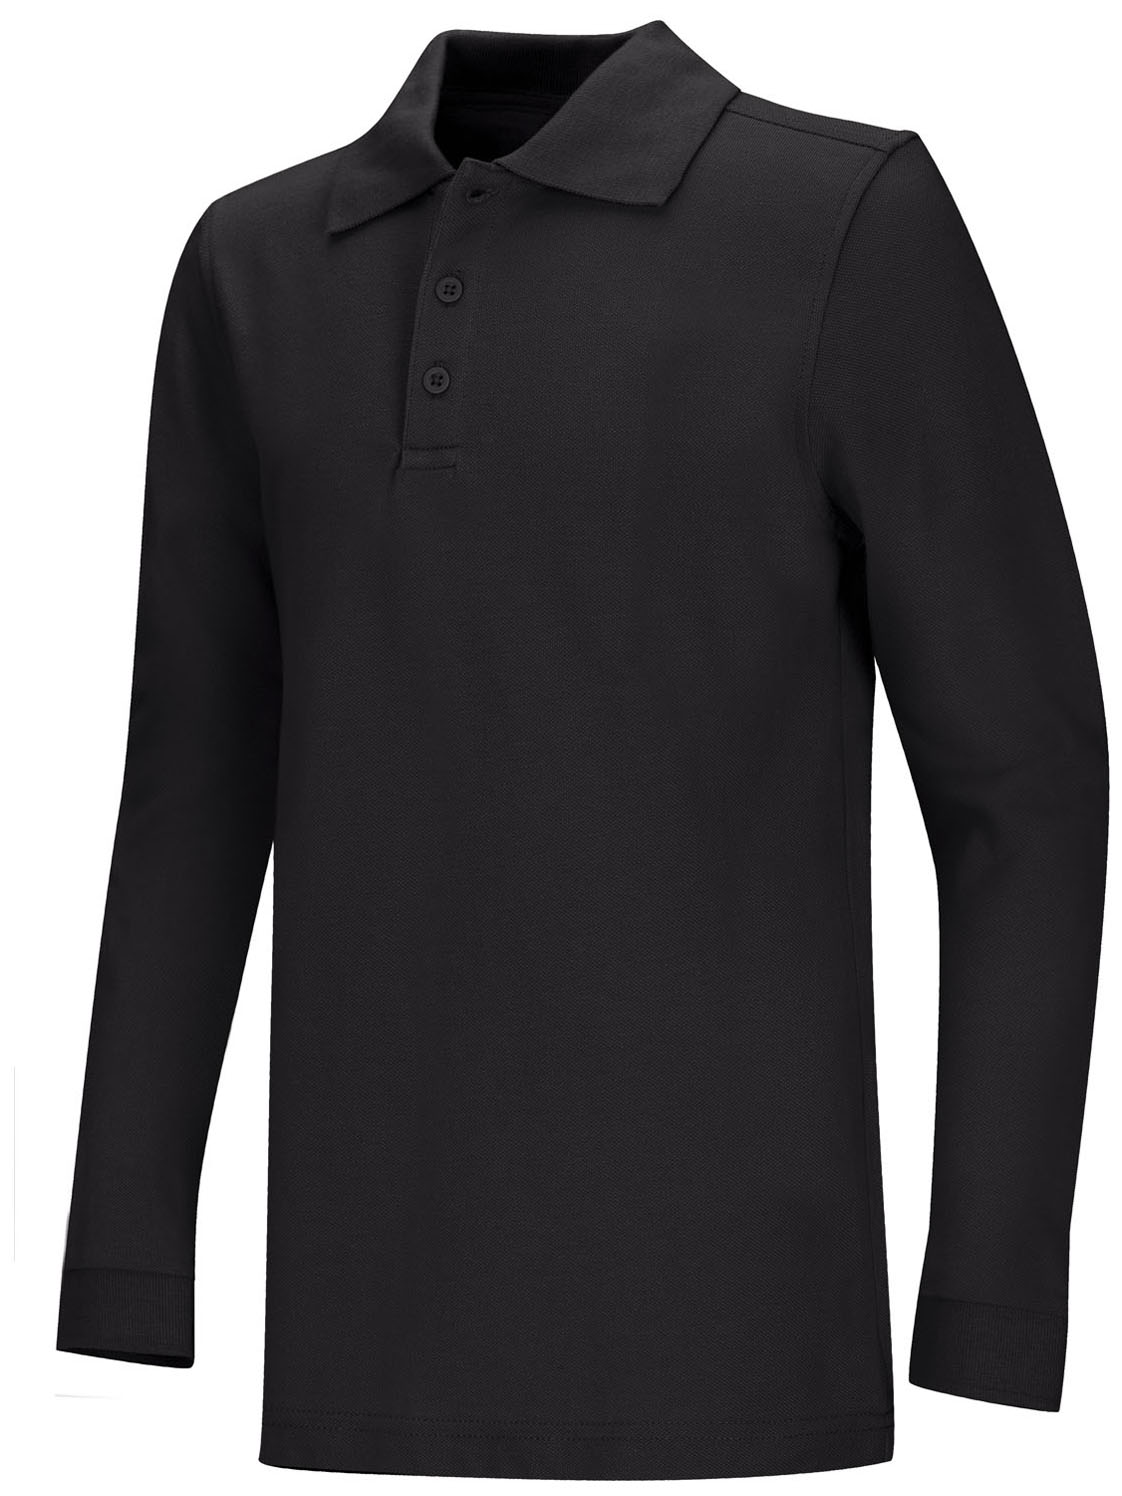 Northwest Academy 6th Grade Long Sleeve Golf Shirt